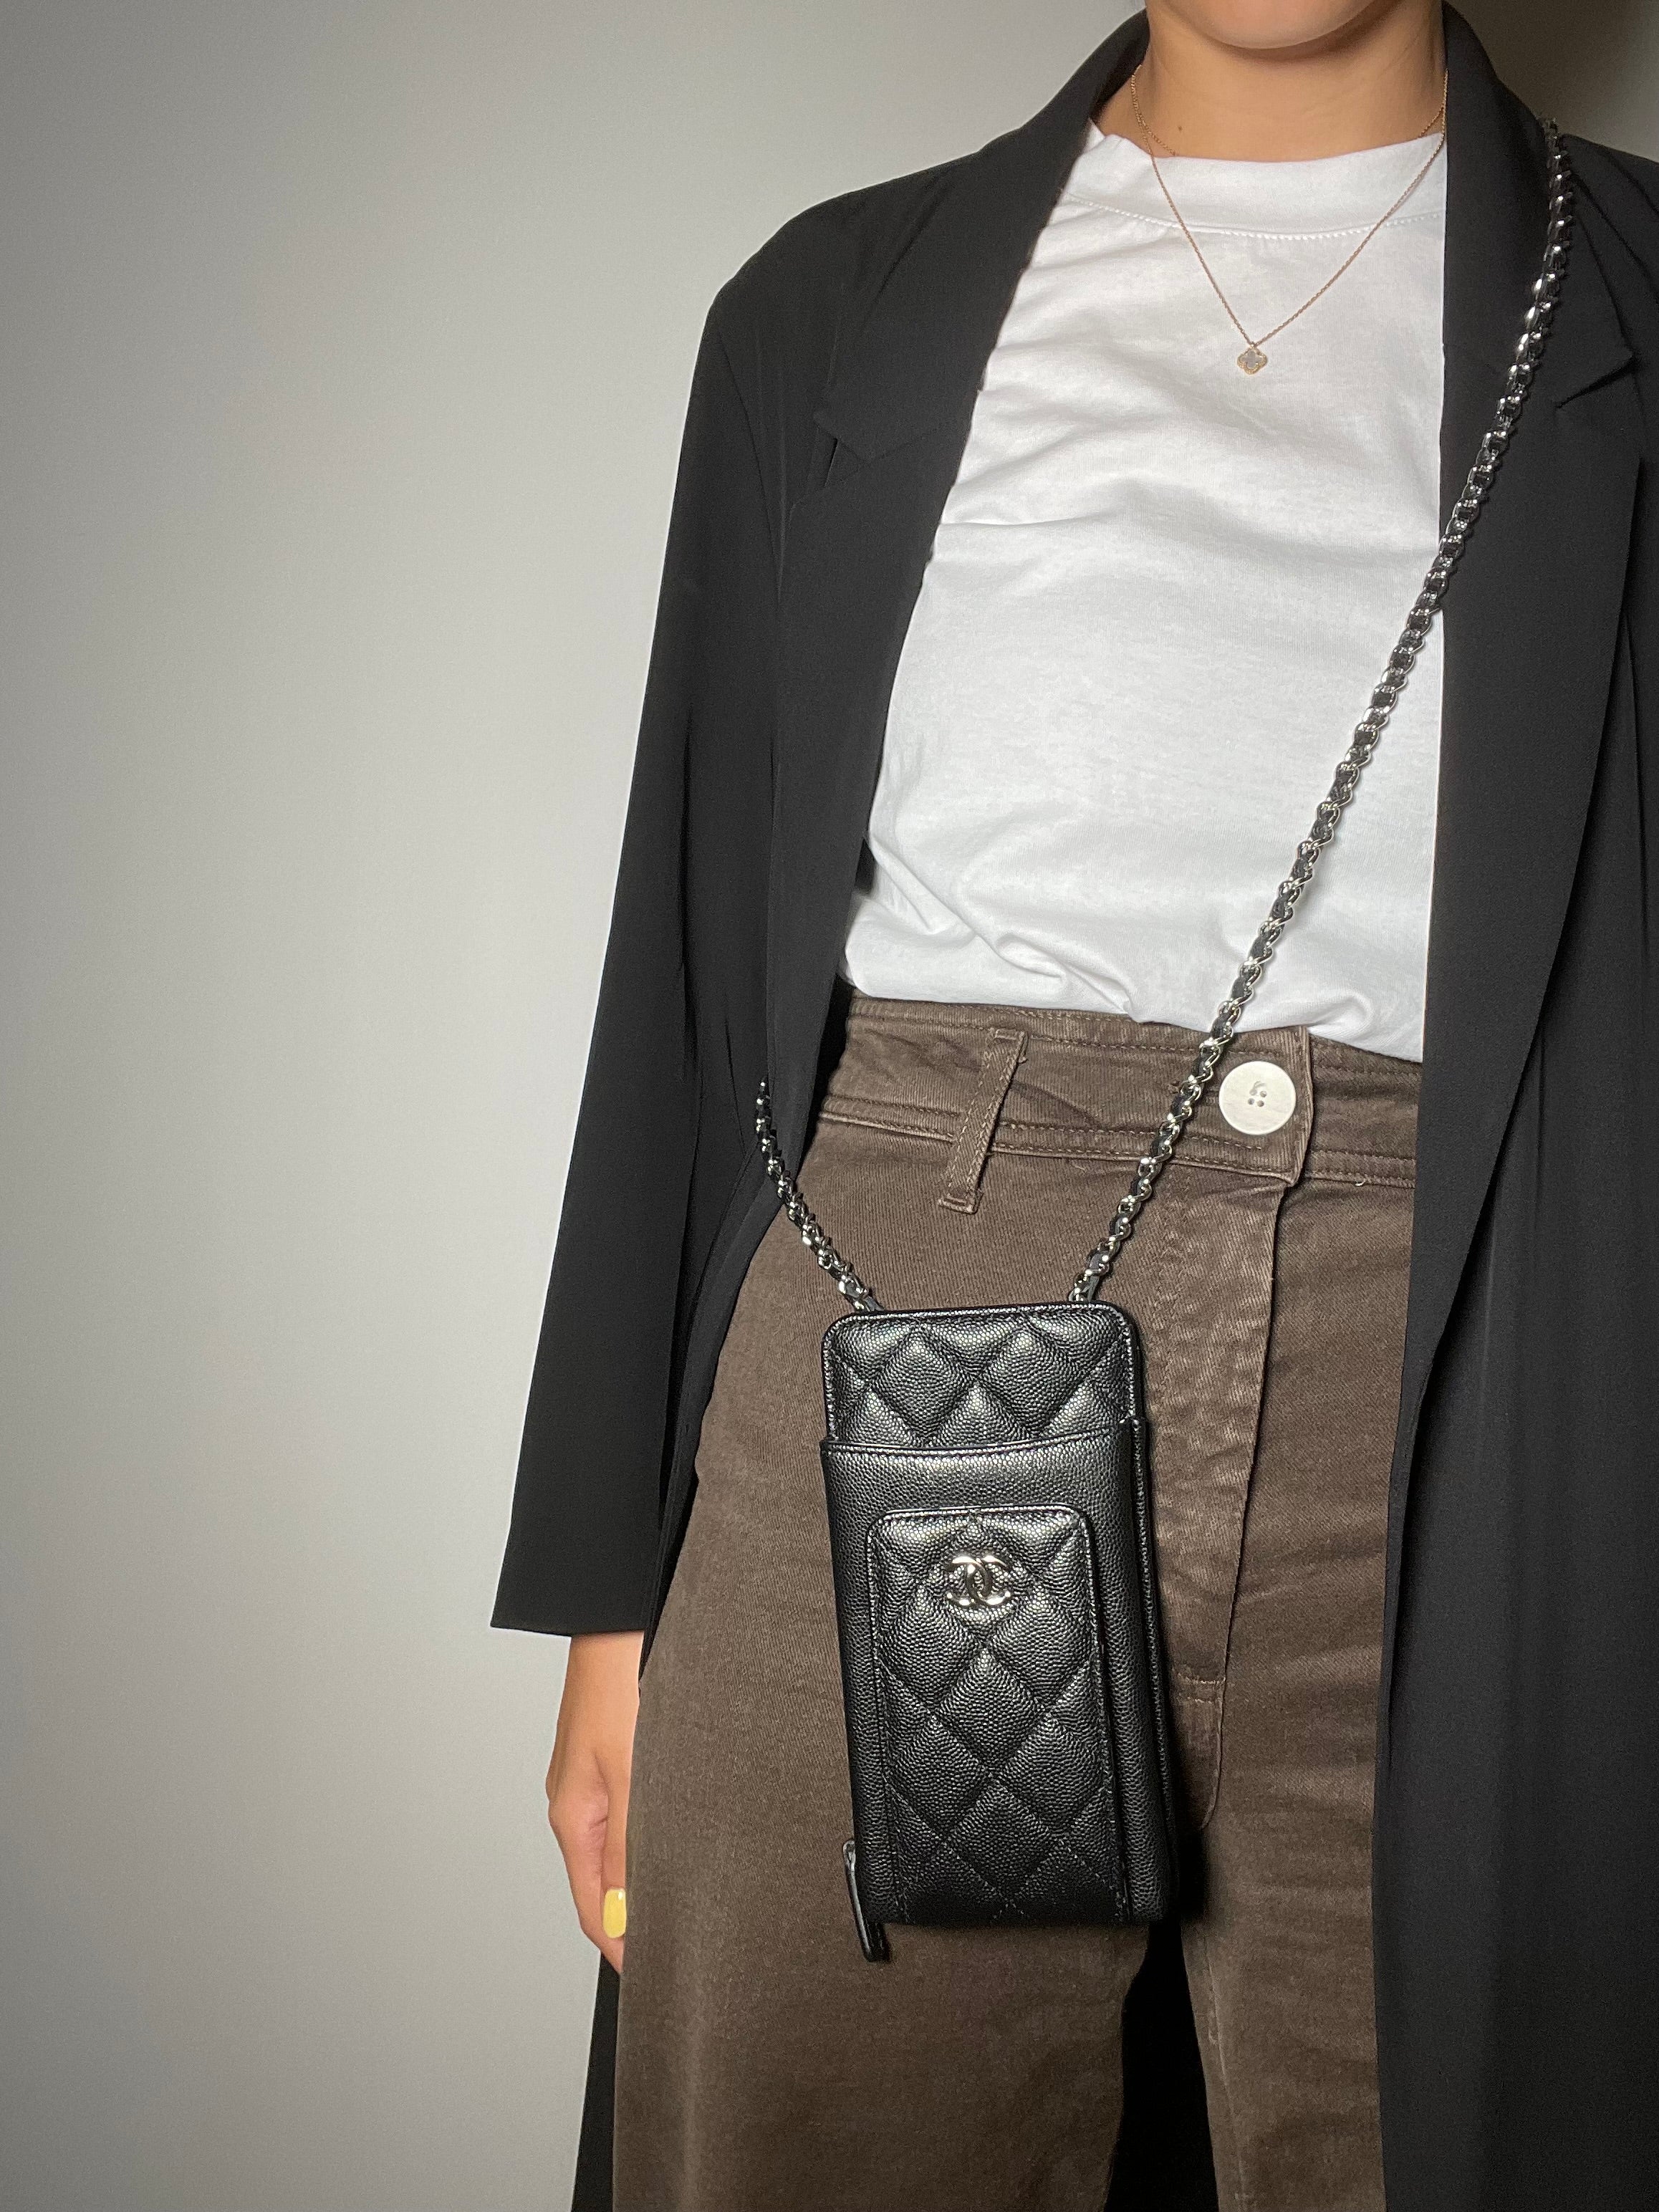 Authentic Vintage Chanel Phone Holder Crossbody Bag